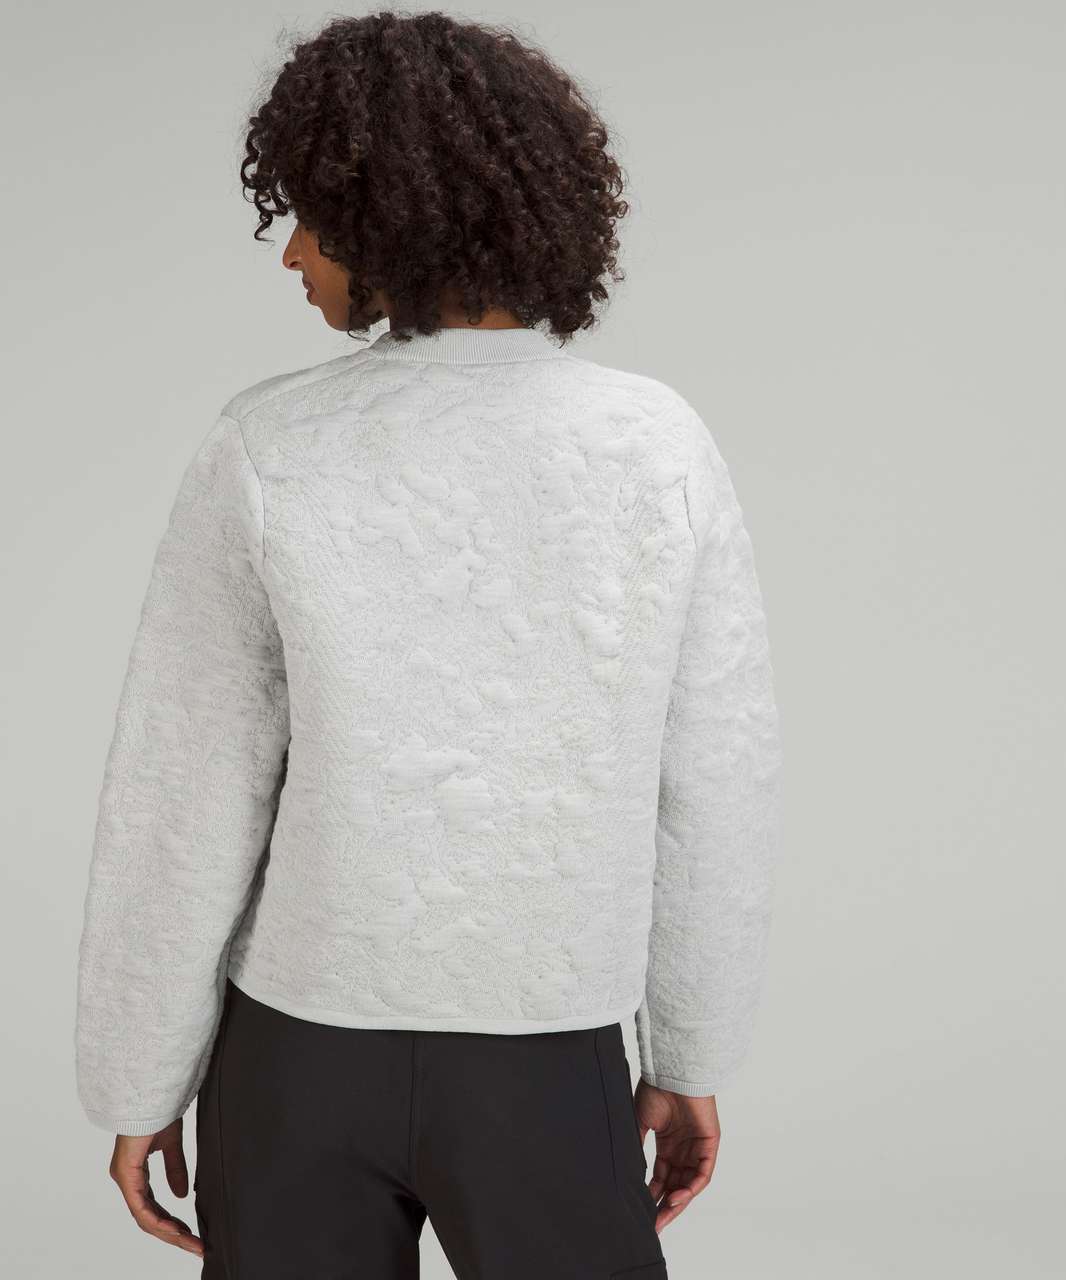 Lululemon Jacquard Multi-Texture Crew Neck Sweater - Heathered Vapor